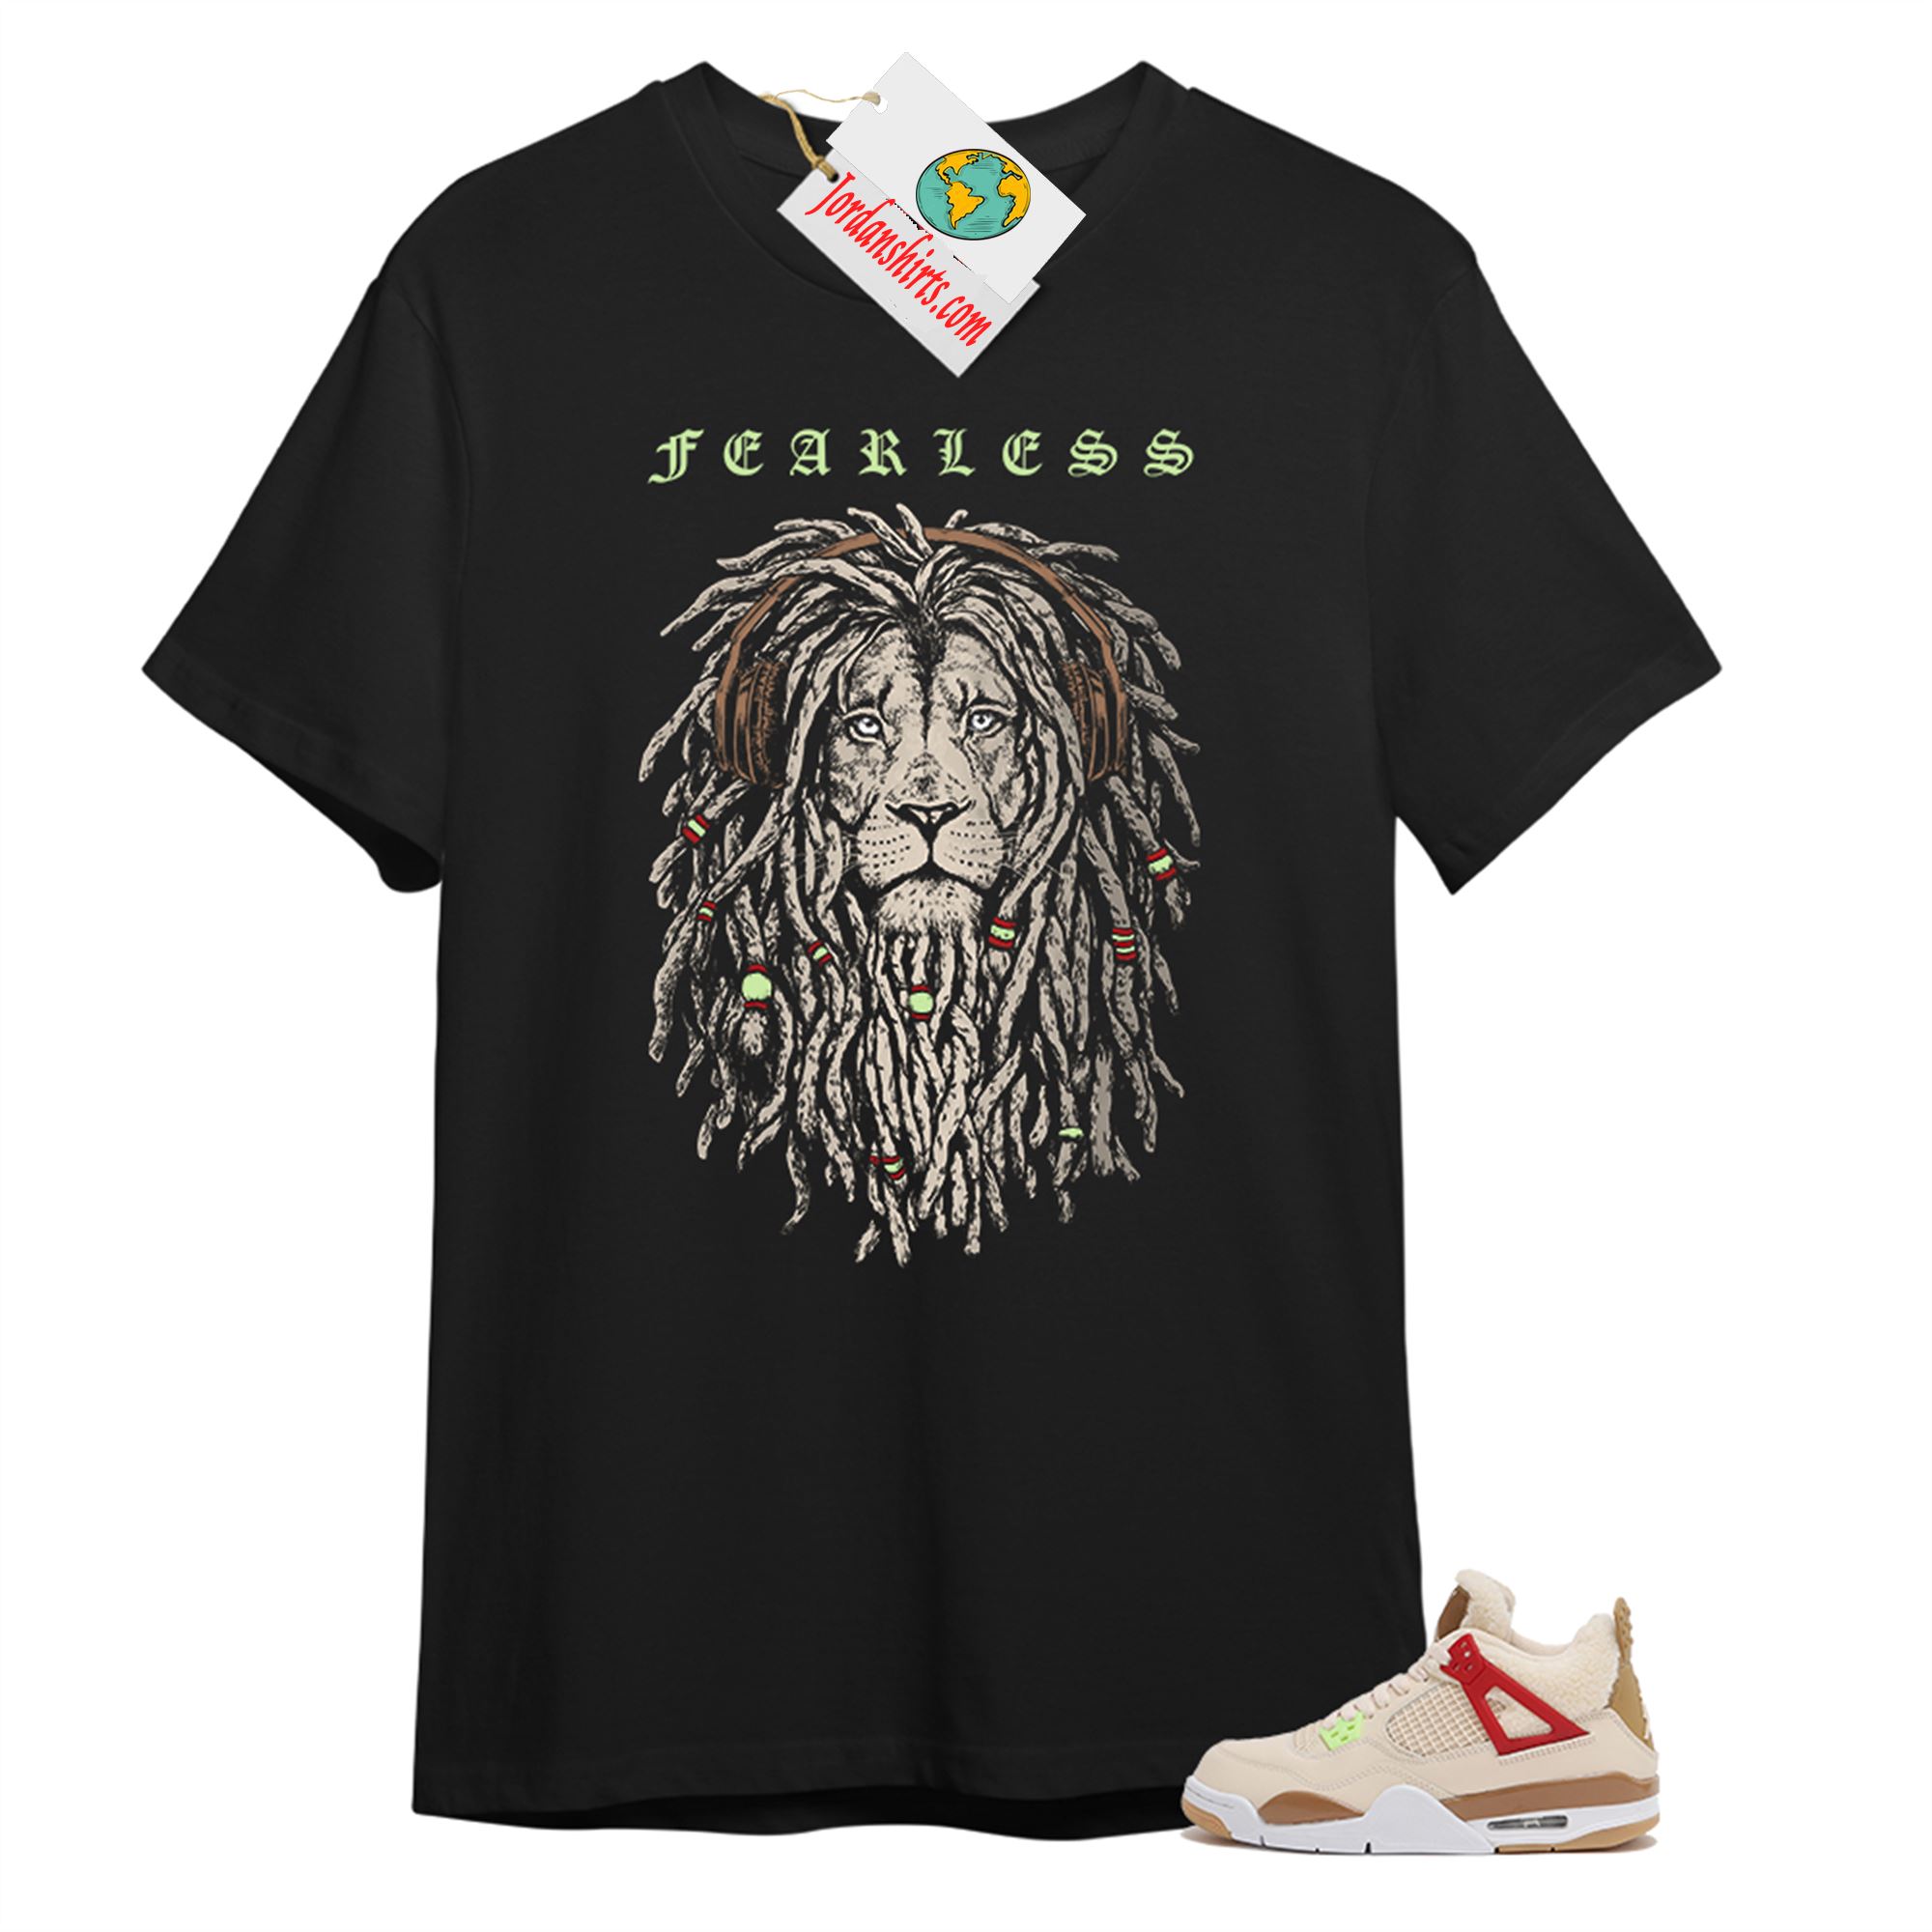 Jordan 4 Shirt, Fearless Lion Black T-shirt Air Jordan 4 Wild Things 4s Plus Size Up To 5xl